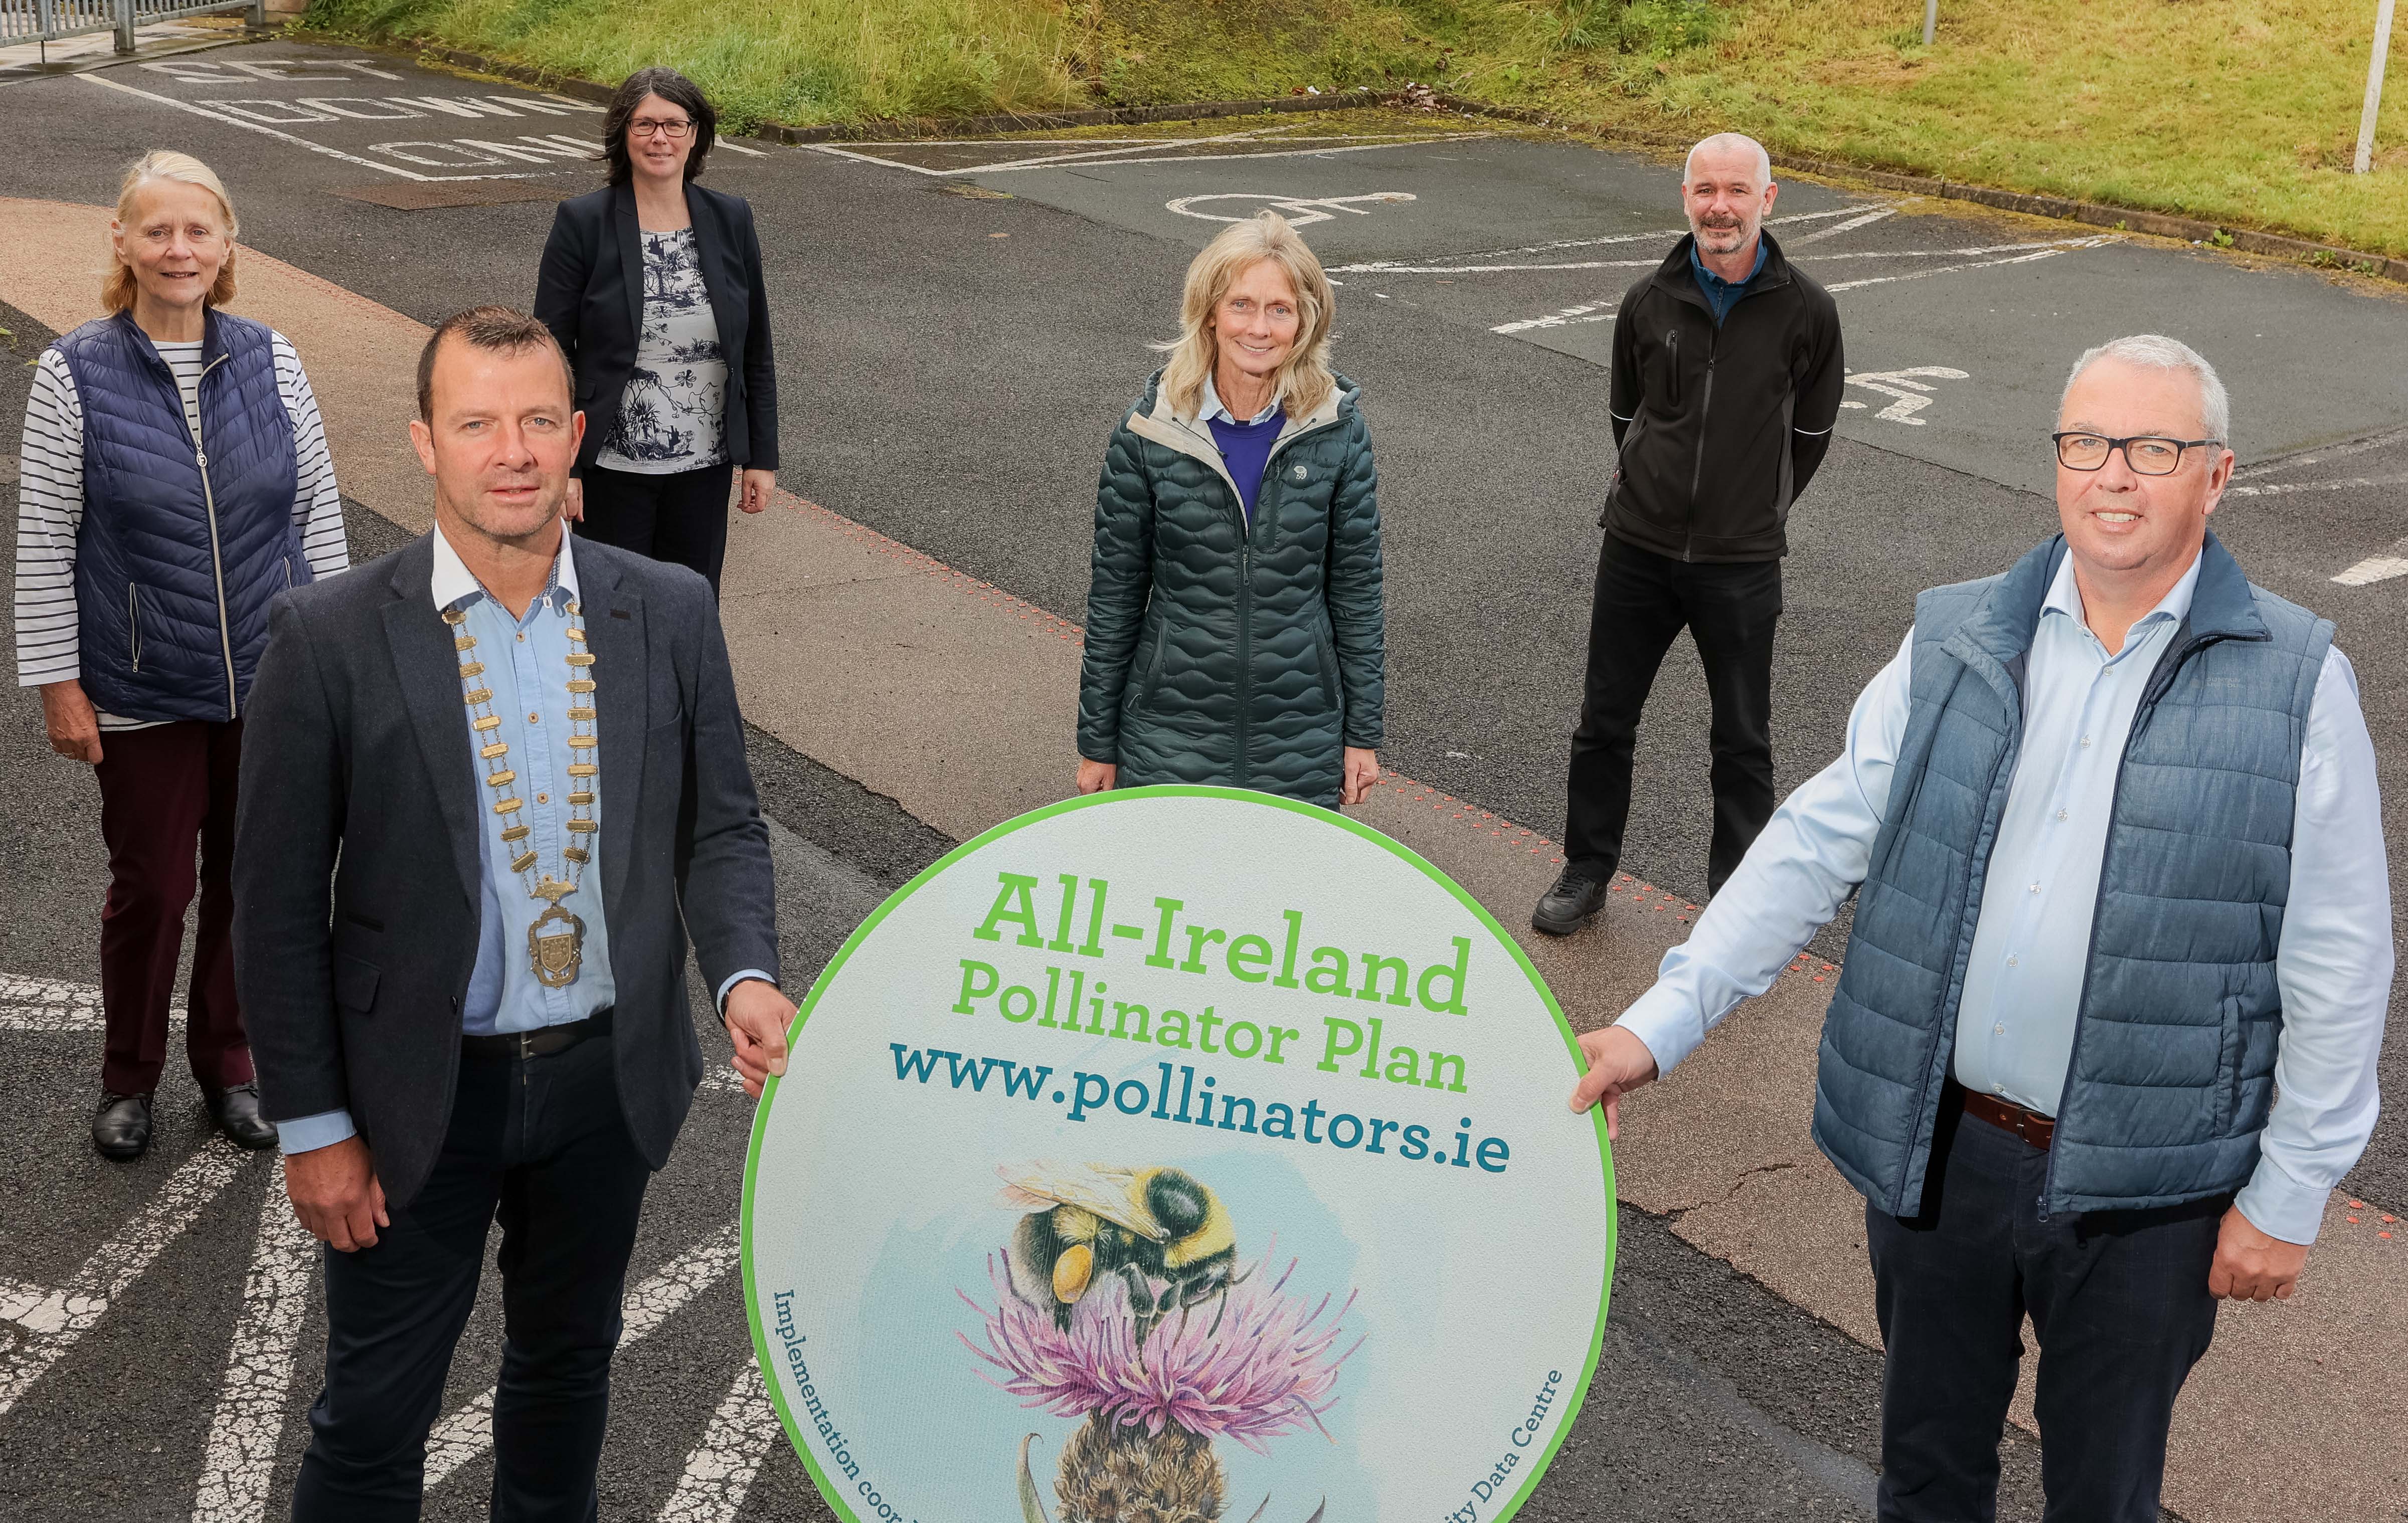 Sligo is buzzing!  New Partnership for Pollinators in Sligo